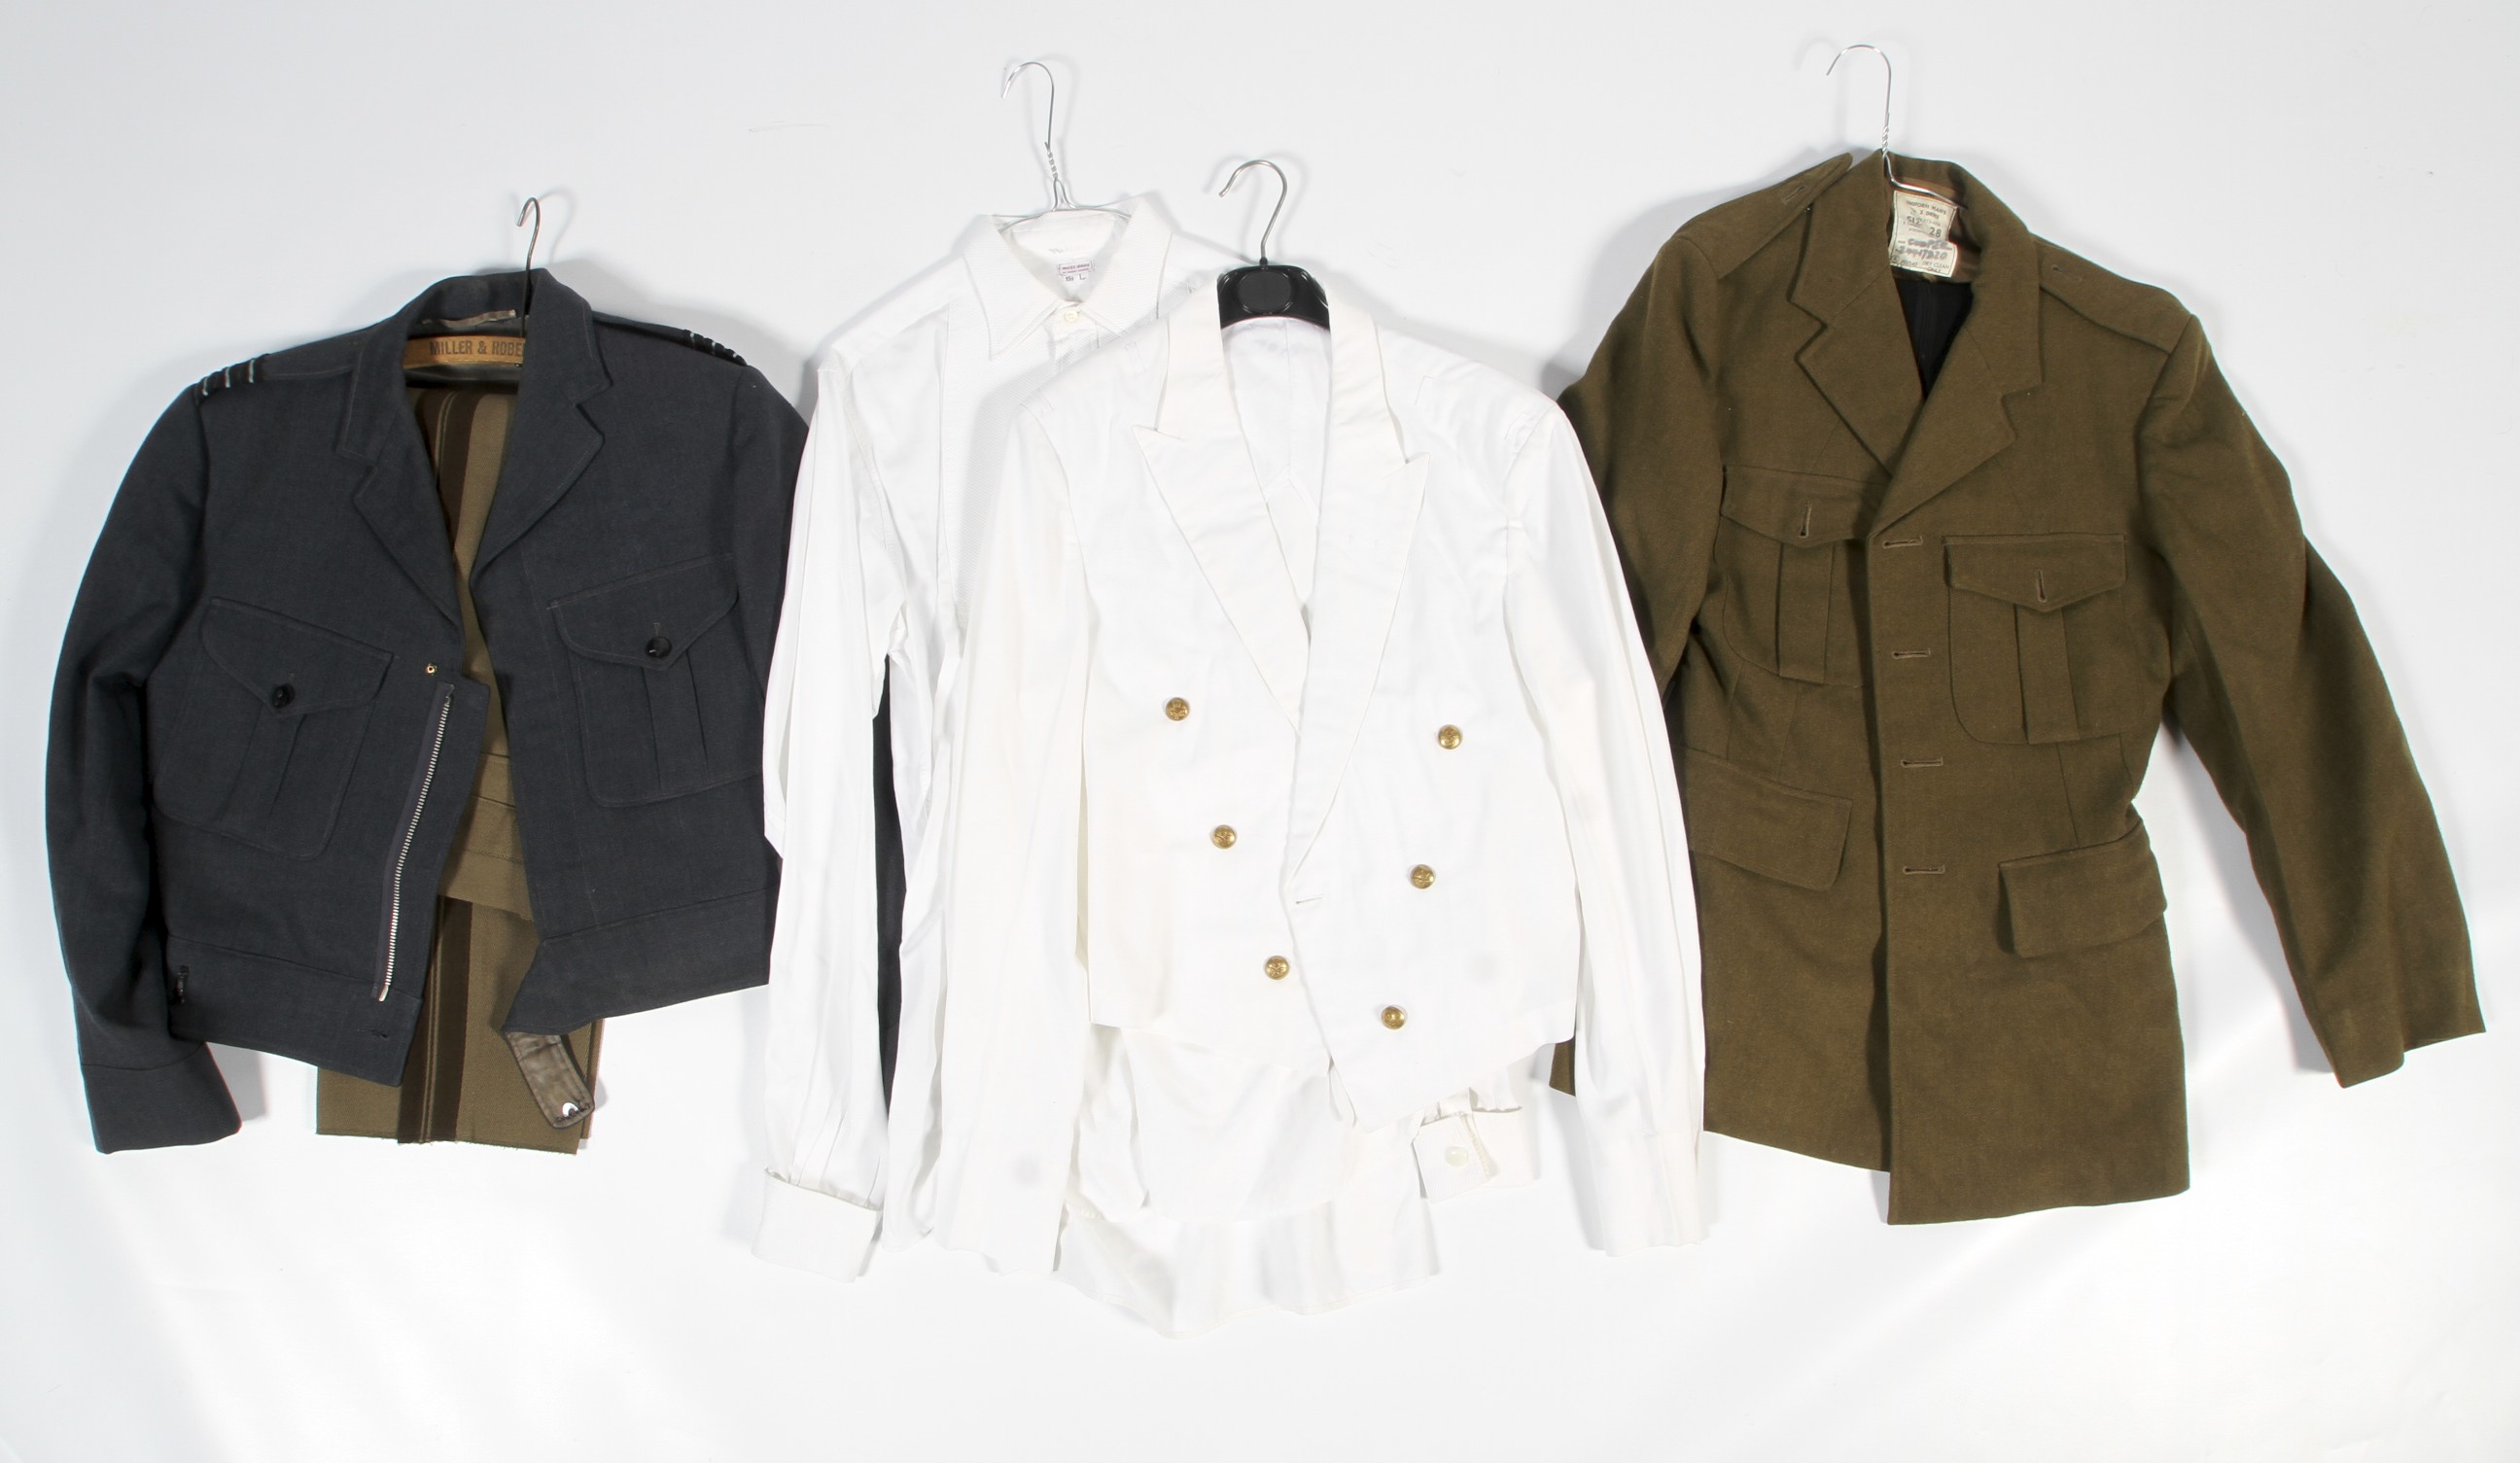 Five assorted military part uniforms. Co